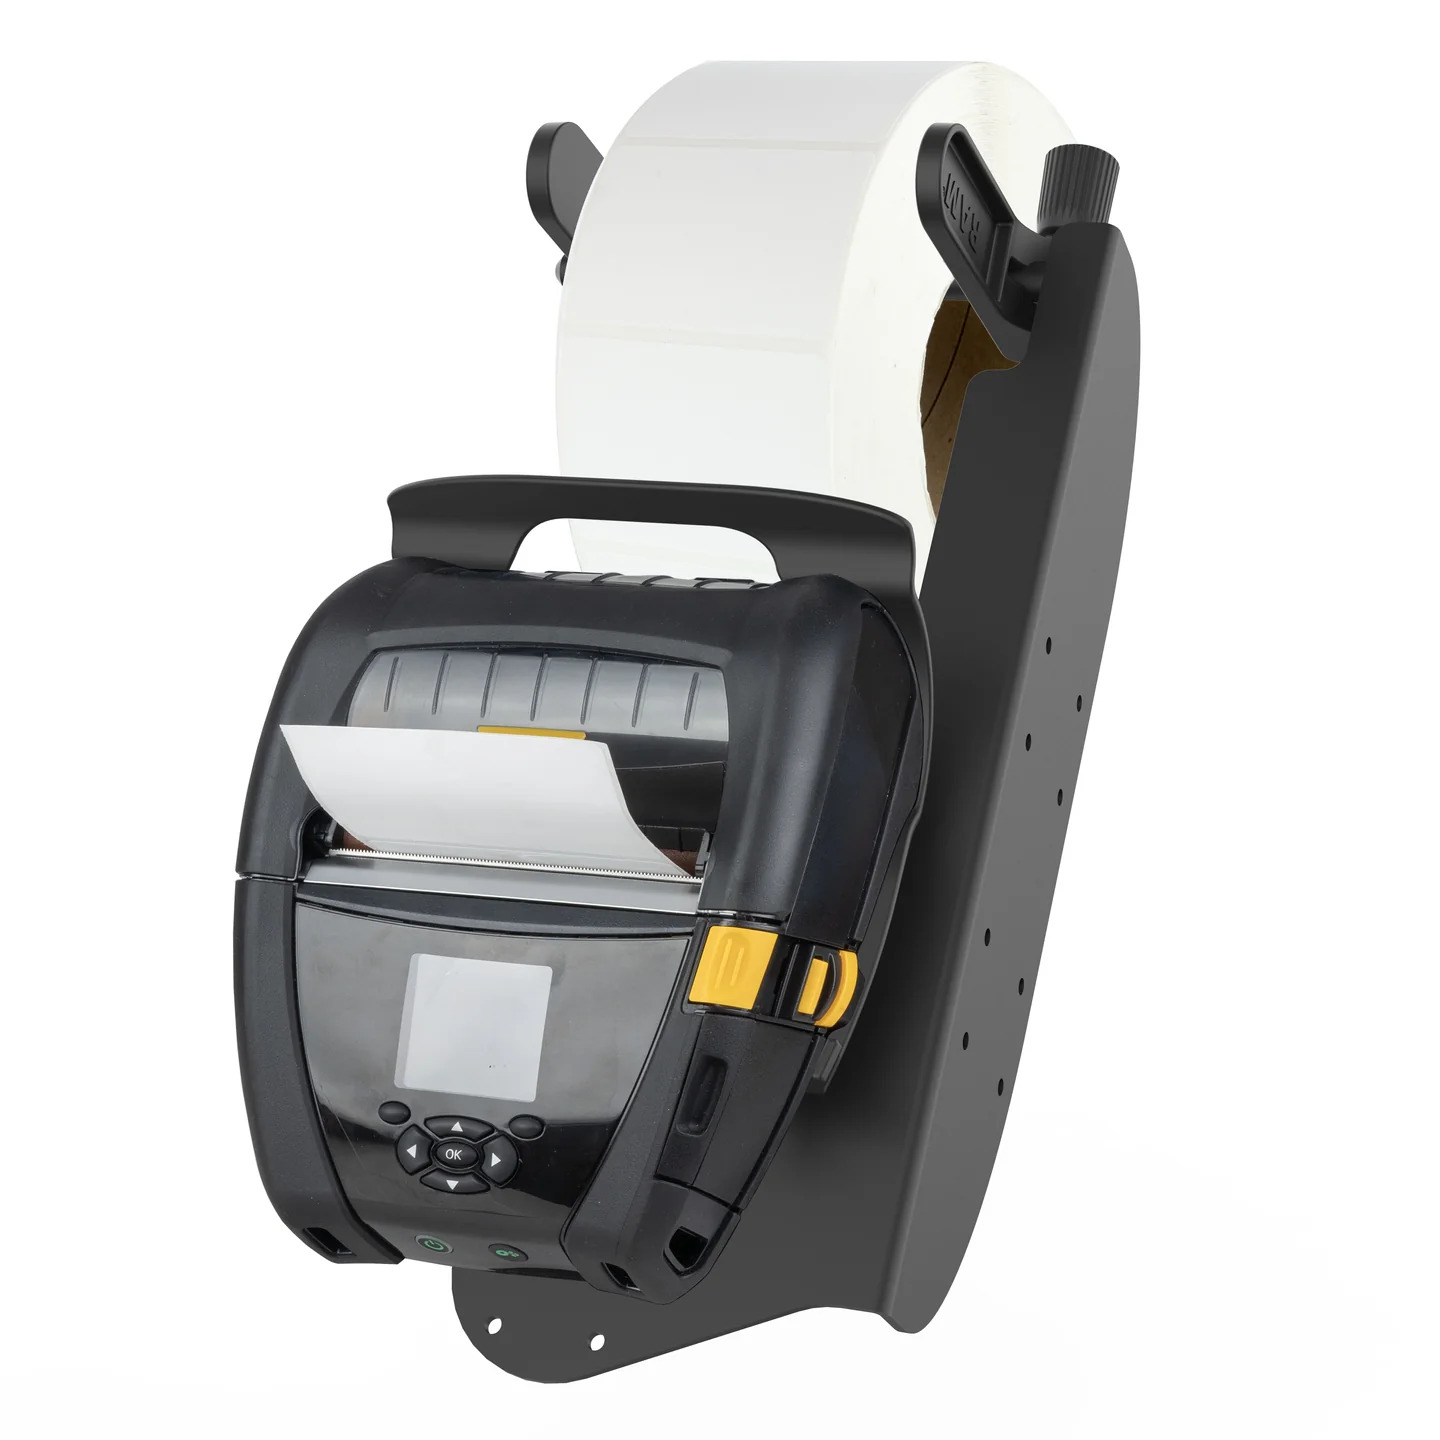 Printer Mount With Paper Feed For Zebra Zq630 Series Ram Pm1 Ze31u 4308